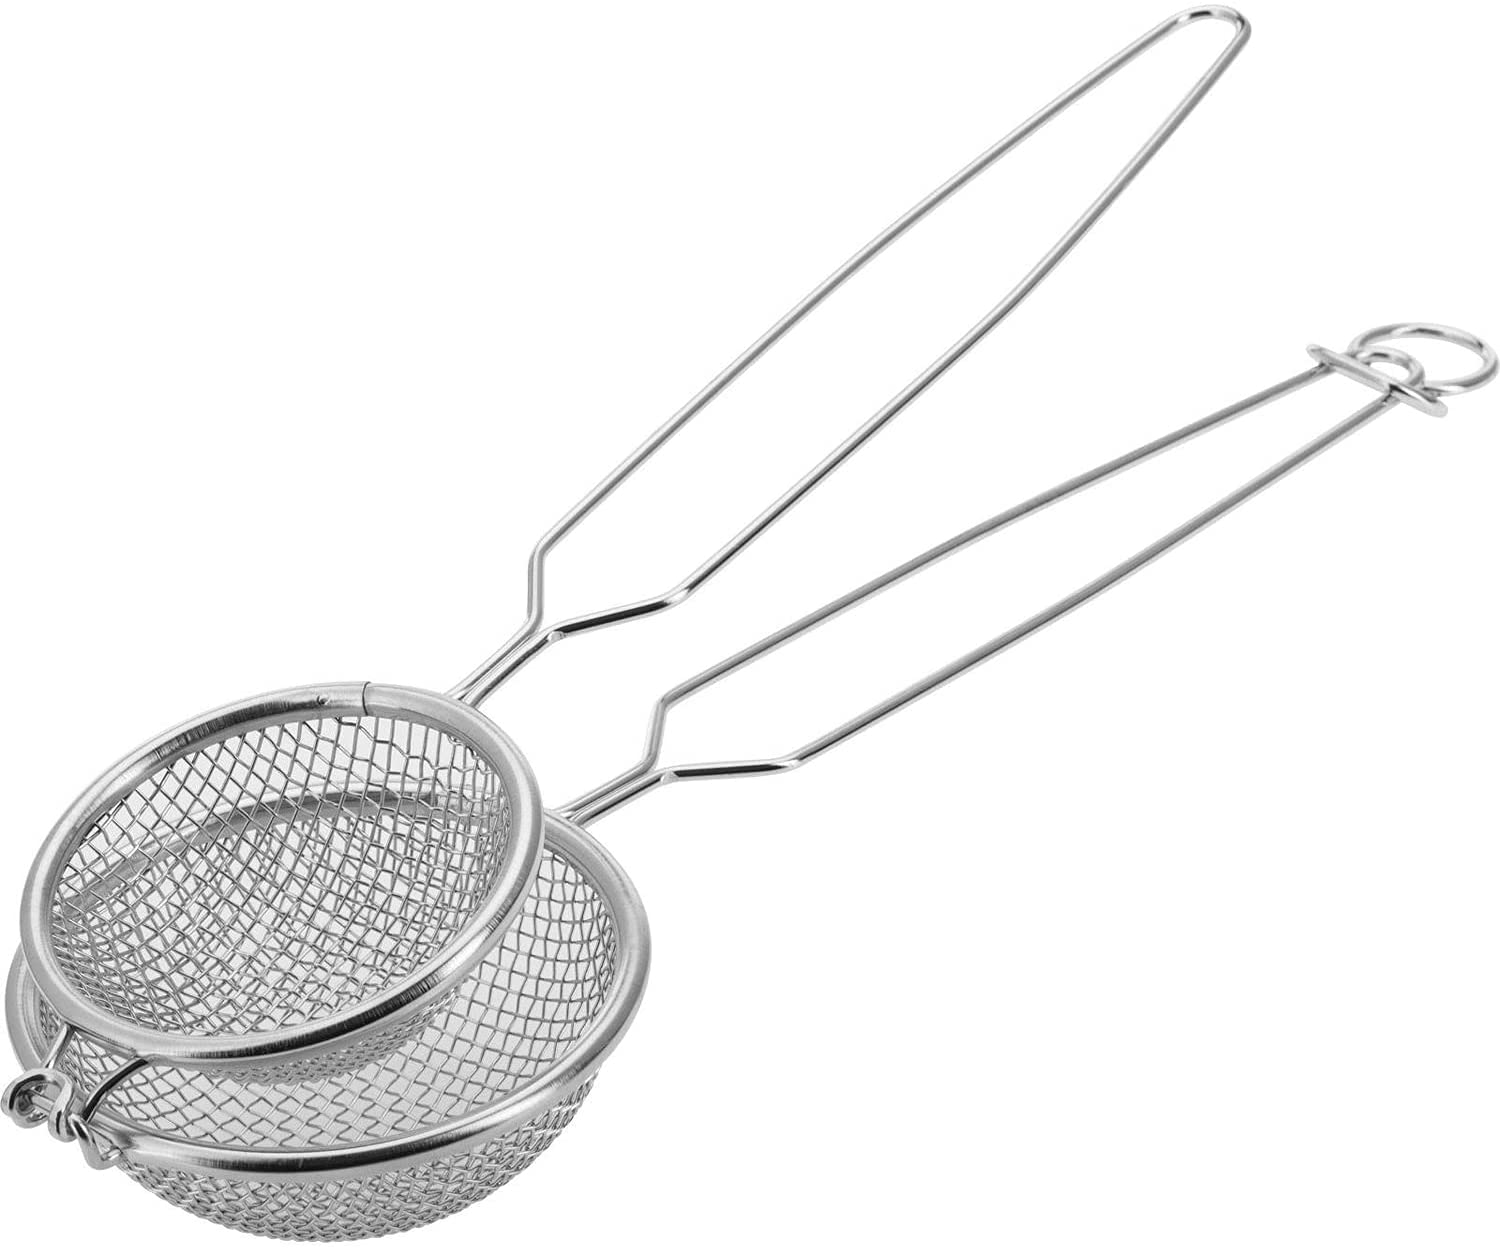 Westmark 12432270 Nesting Spoon Diameter 10 cm Length 35 cm Stainless Steel Silver